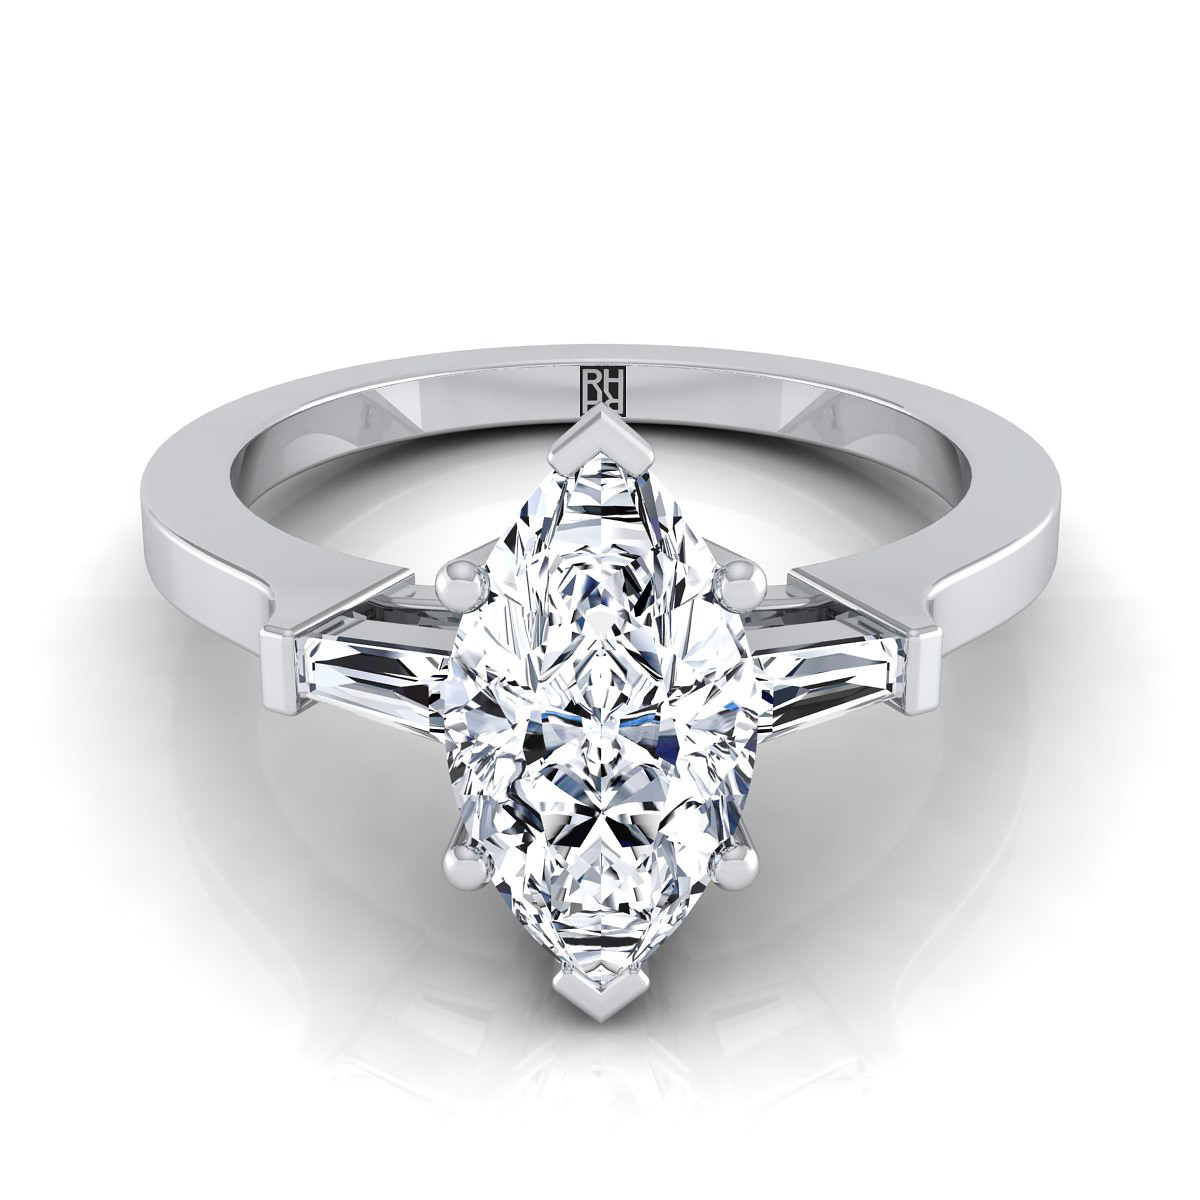 Marquise Diamond Engagement Ring
 Three Stone Marquise Diamond Tapered Baguette Engagement